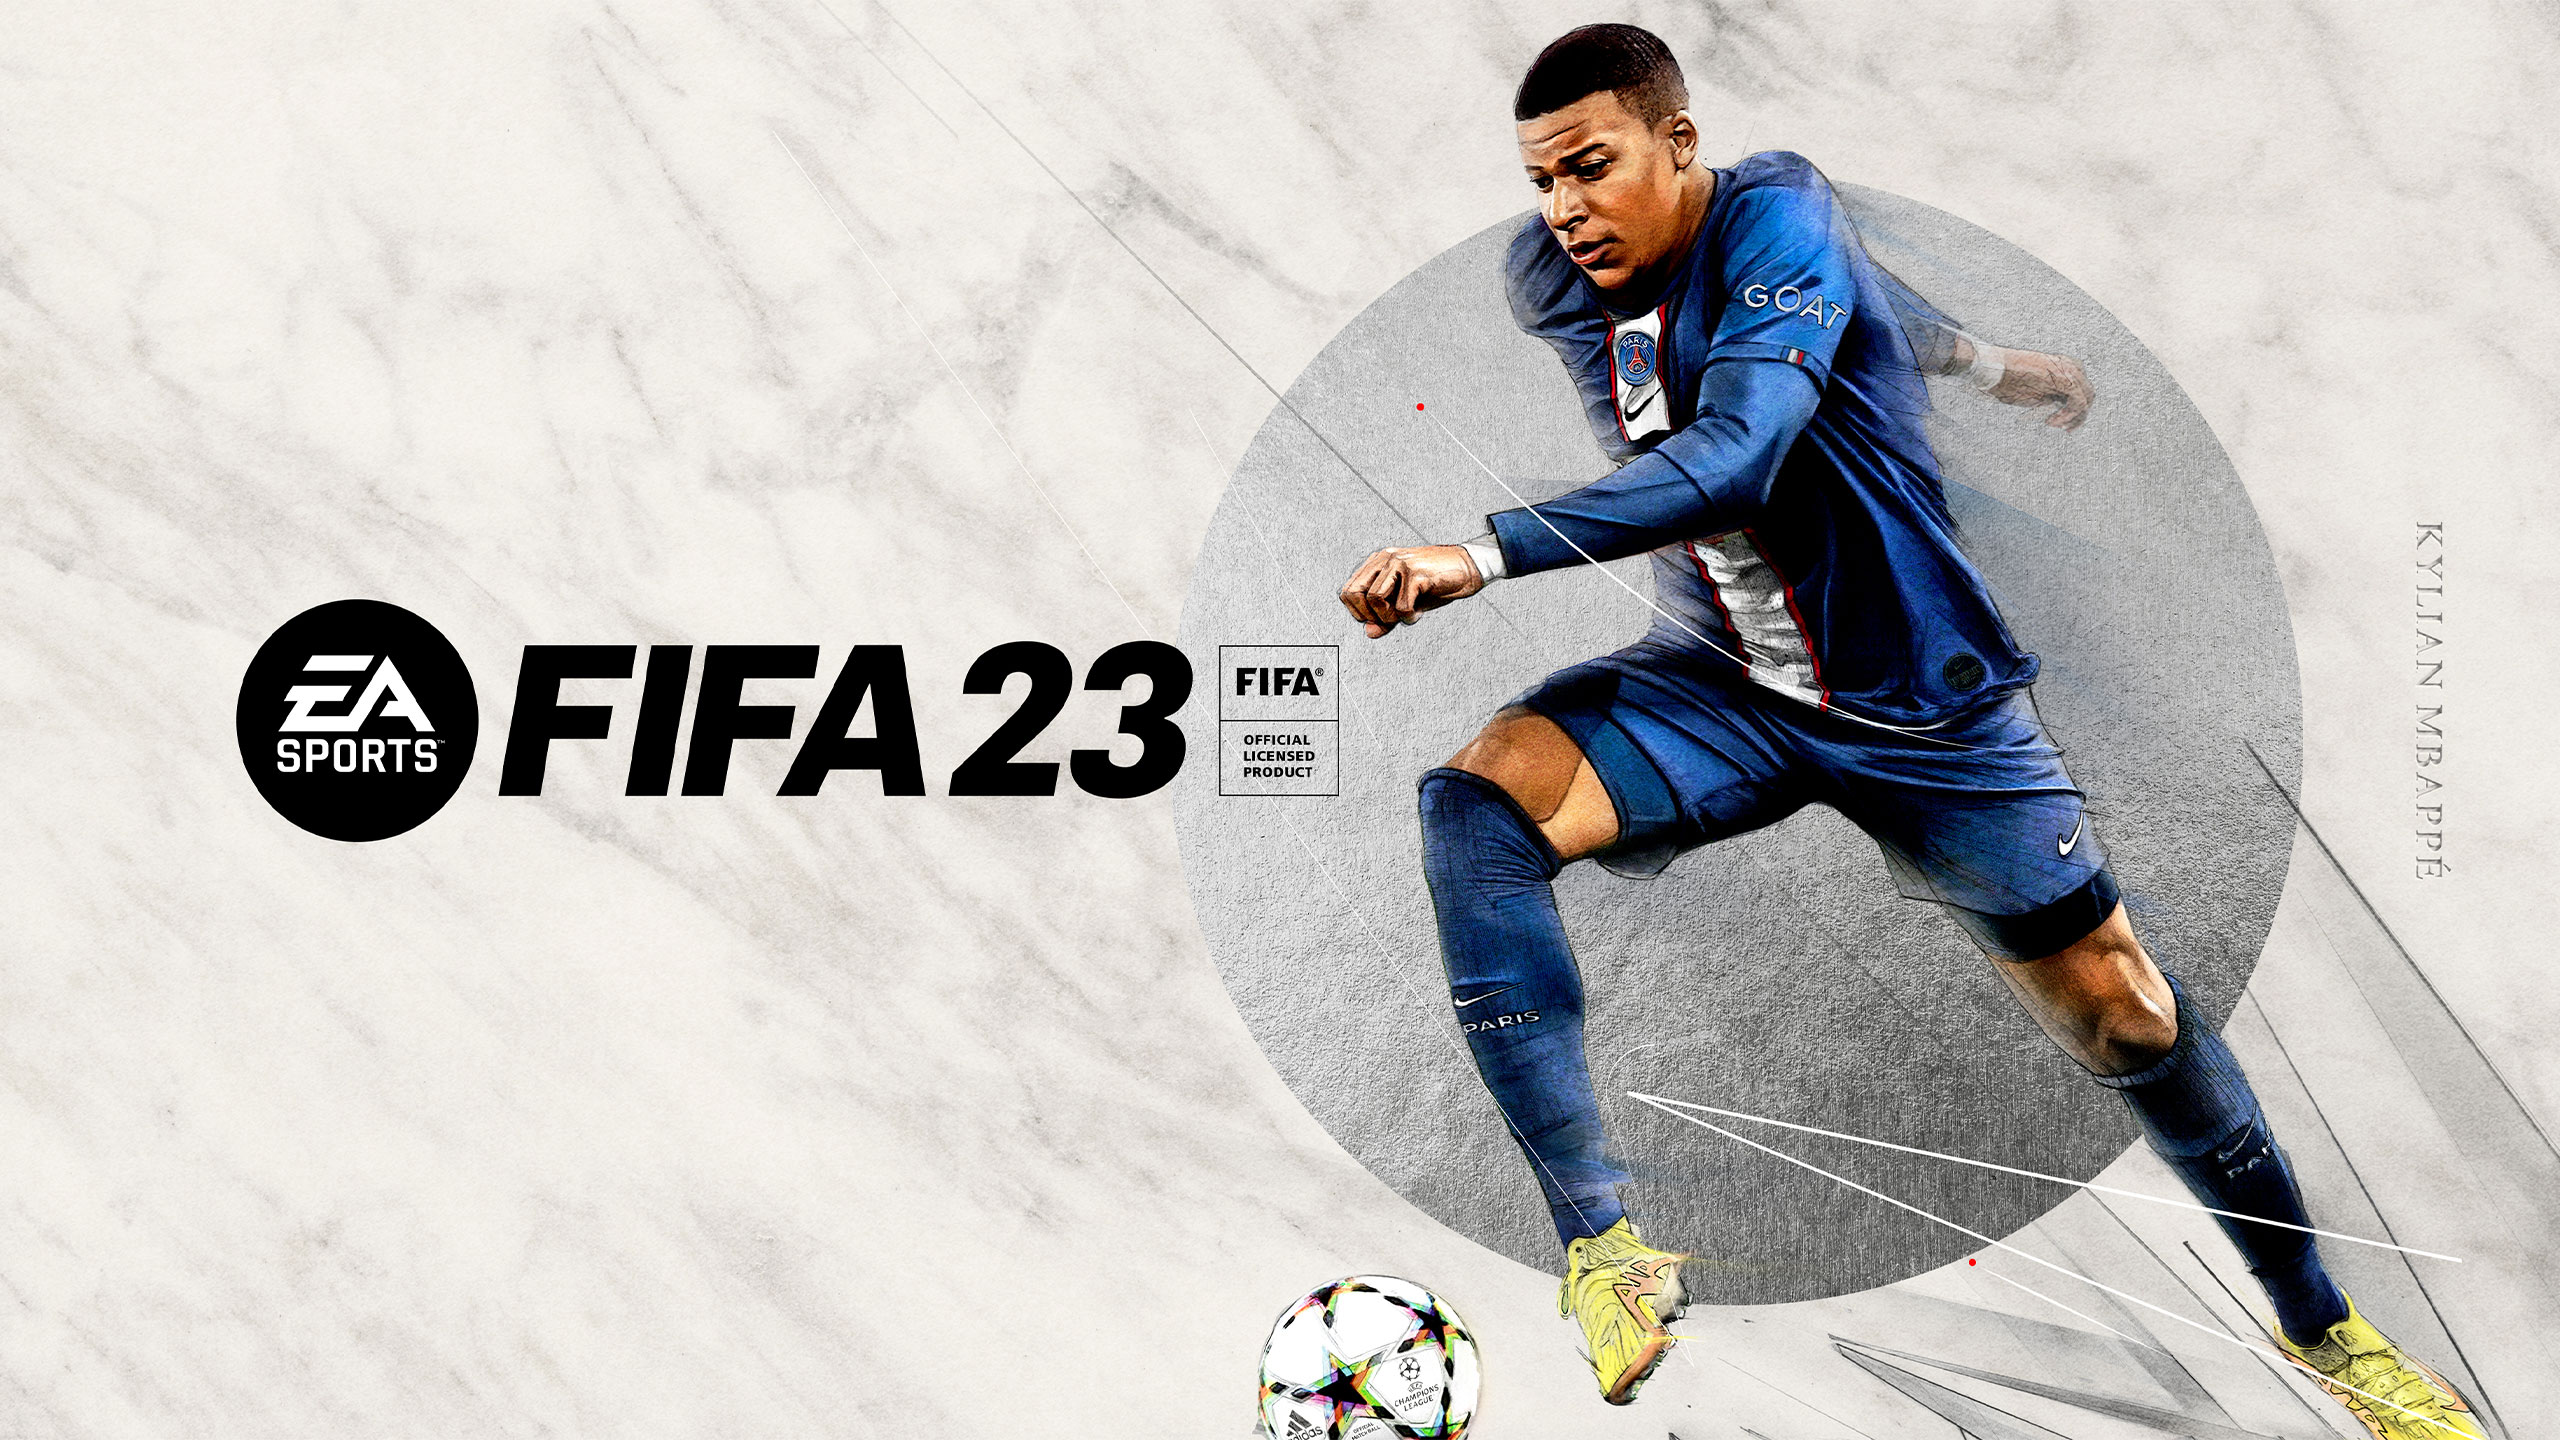 Học cách tải EA SPORTS FIFA 23 Companion miễn phí